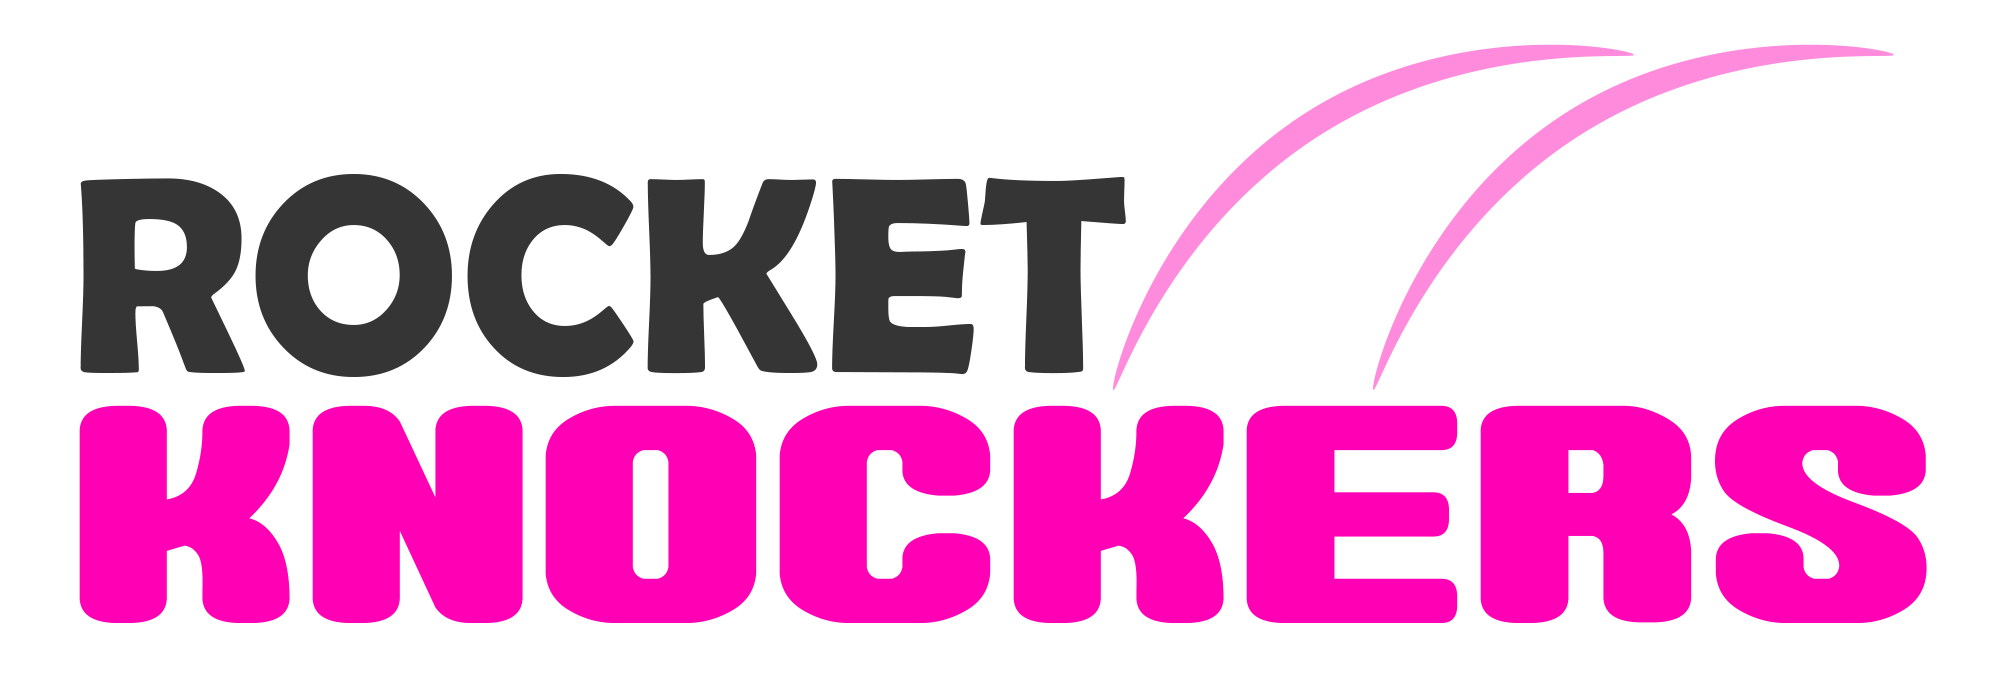 Rocket knockers